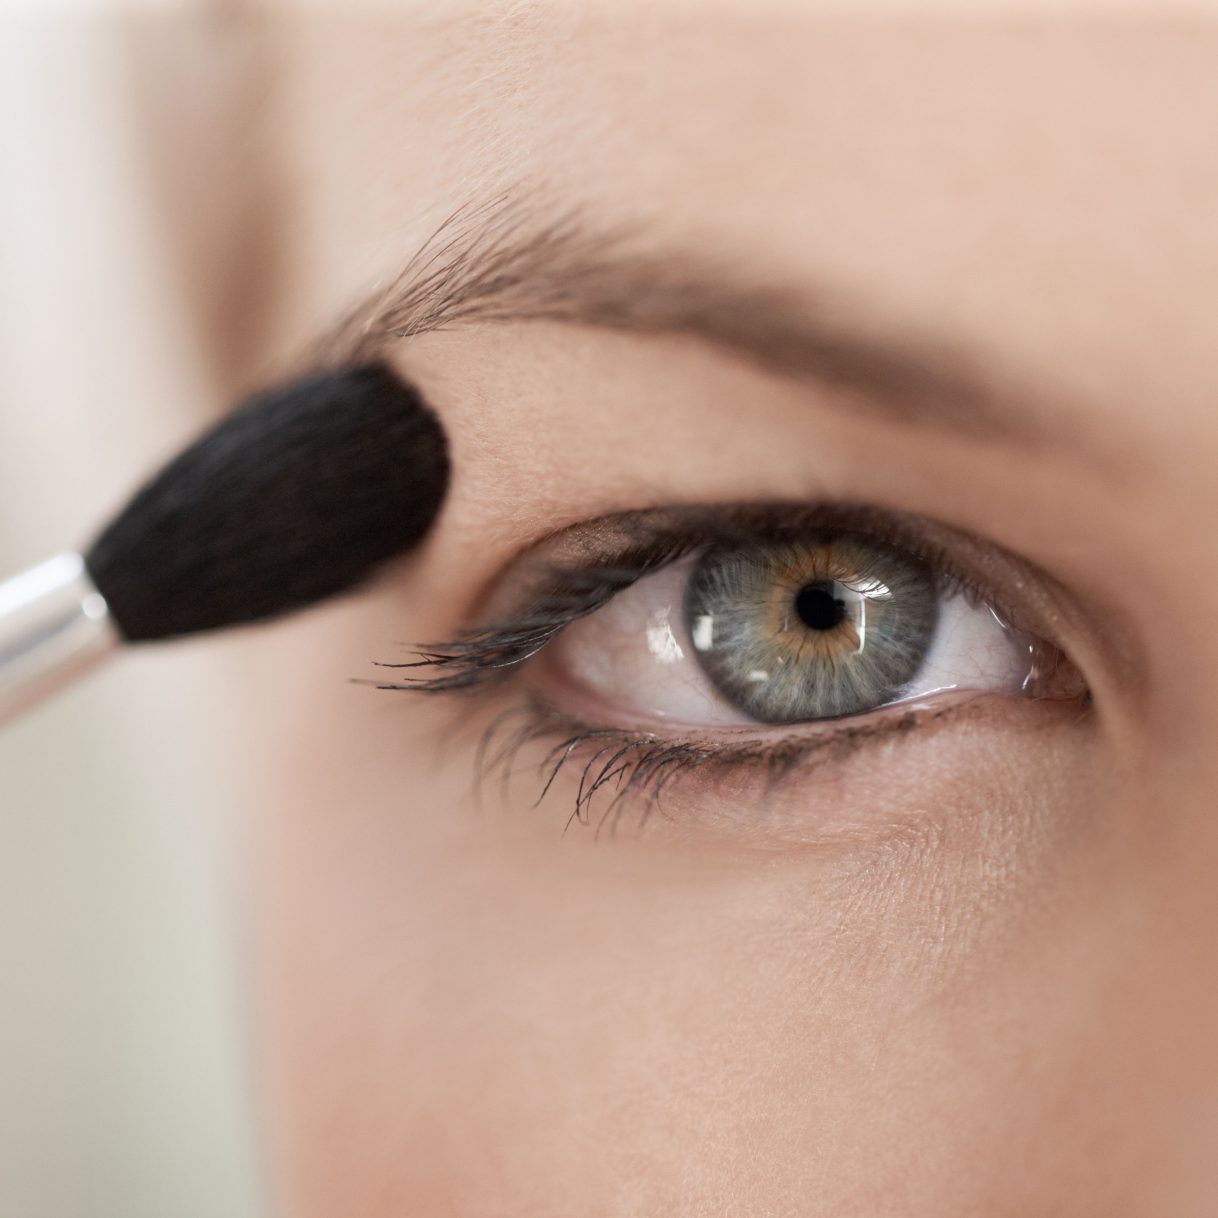 Eye Makeup Images Makeup Tricks For Hooded Eyes Hooded Eyes Makeup Tips And Tricks